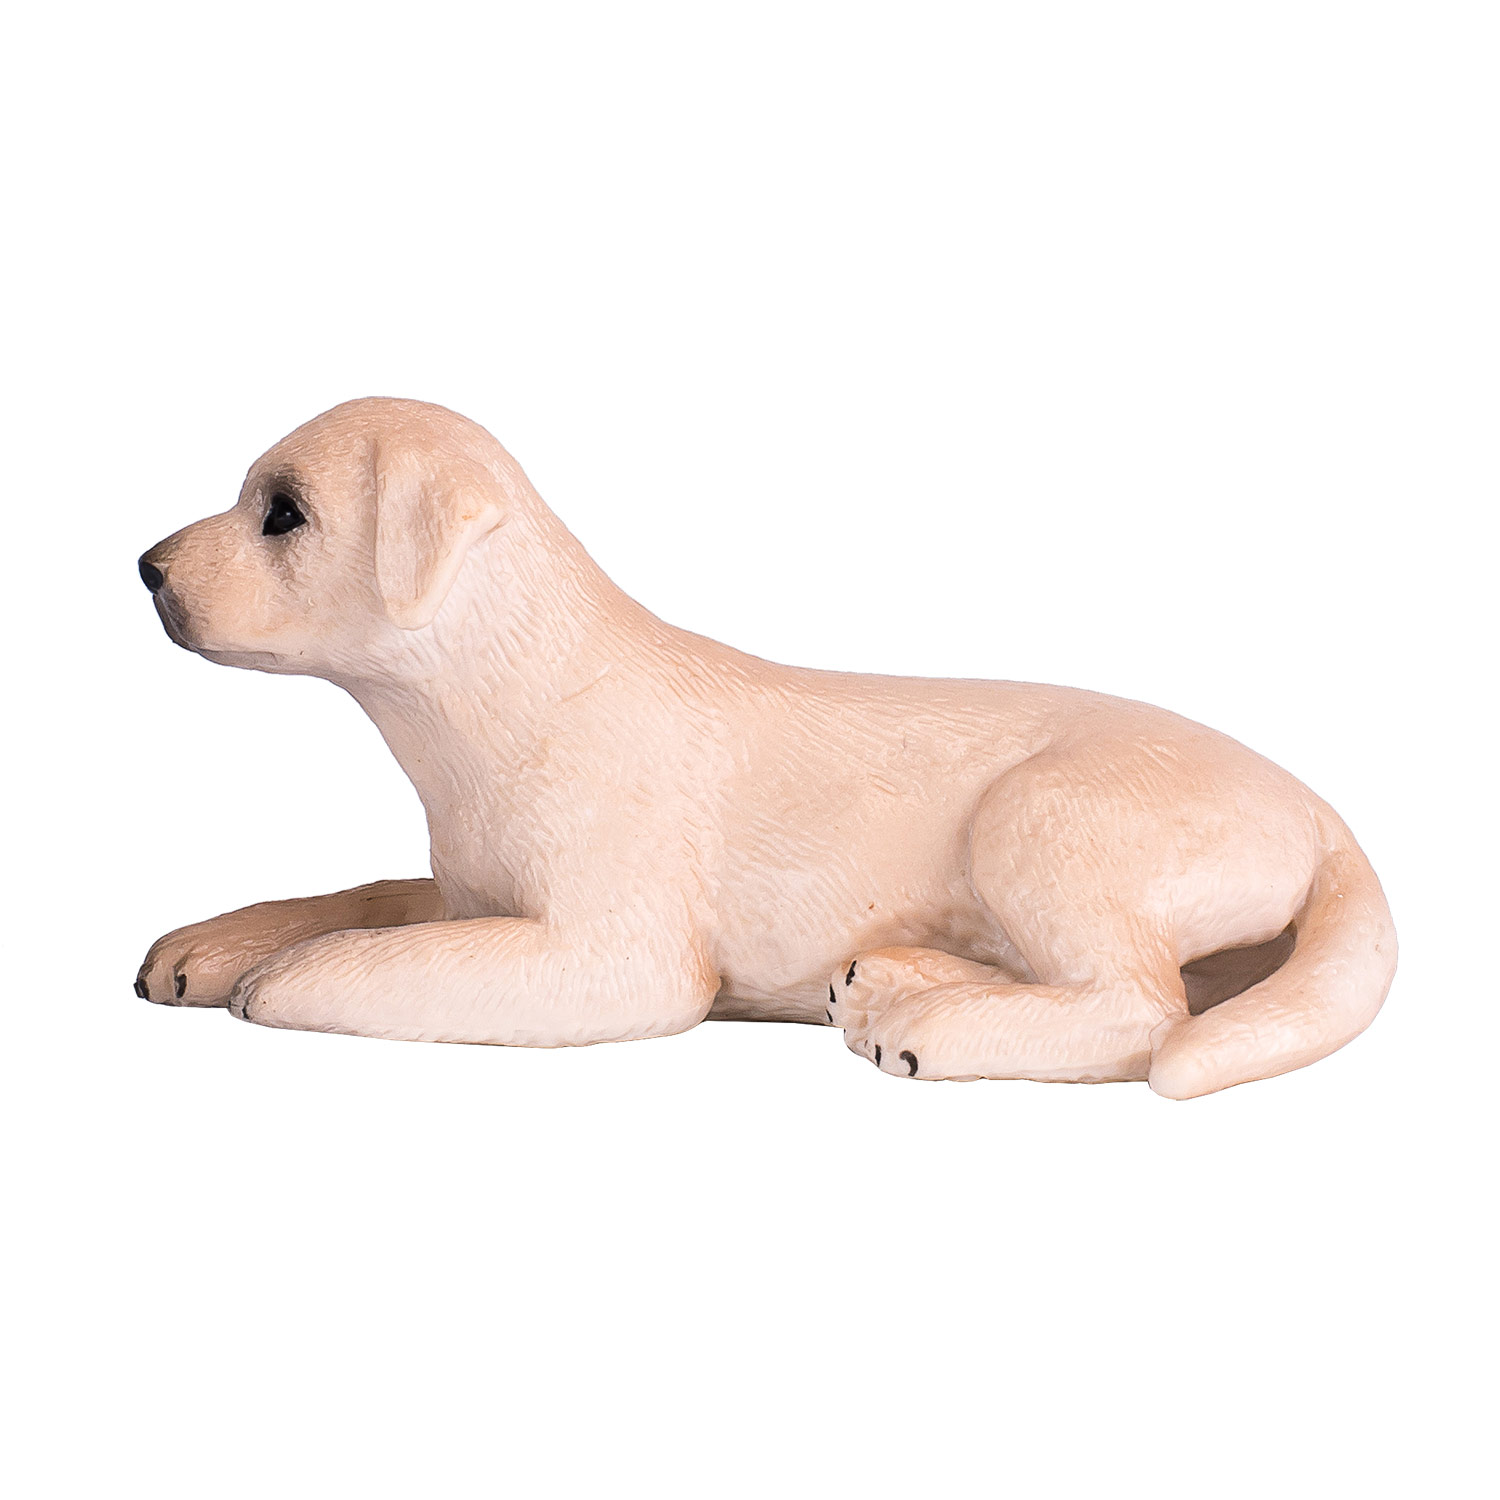 Mojo Farmland Labrador Puppy - 387272